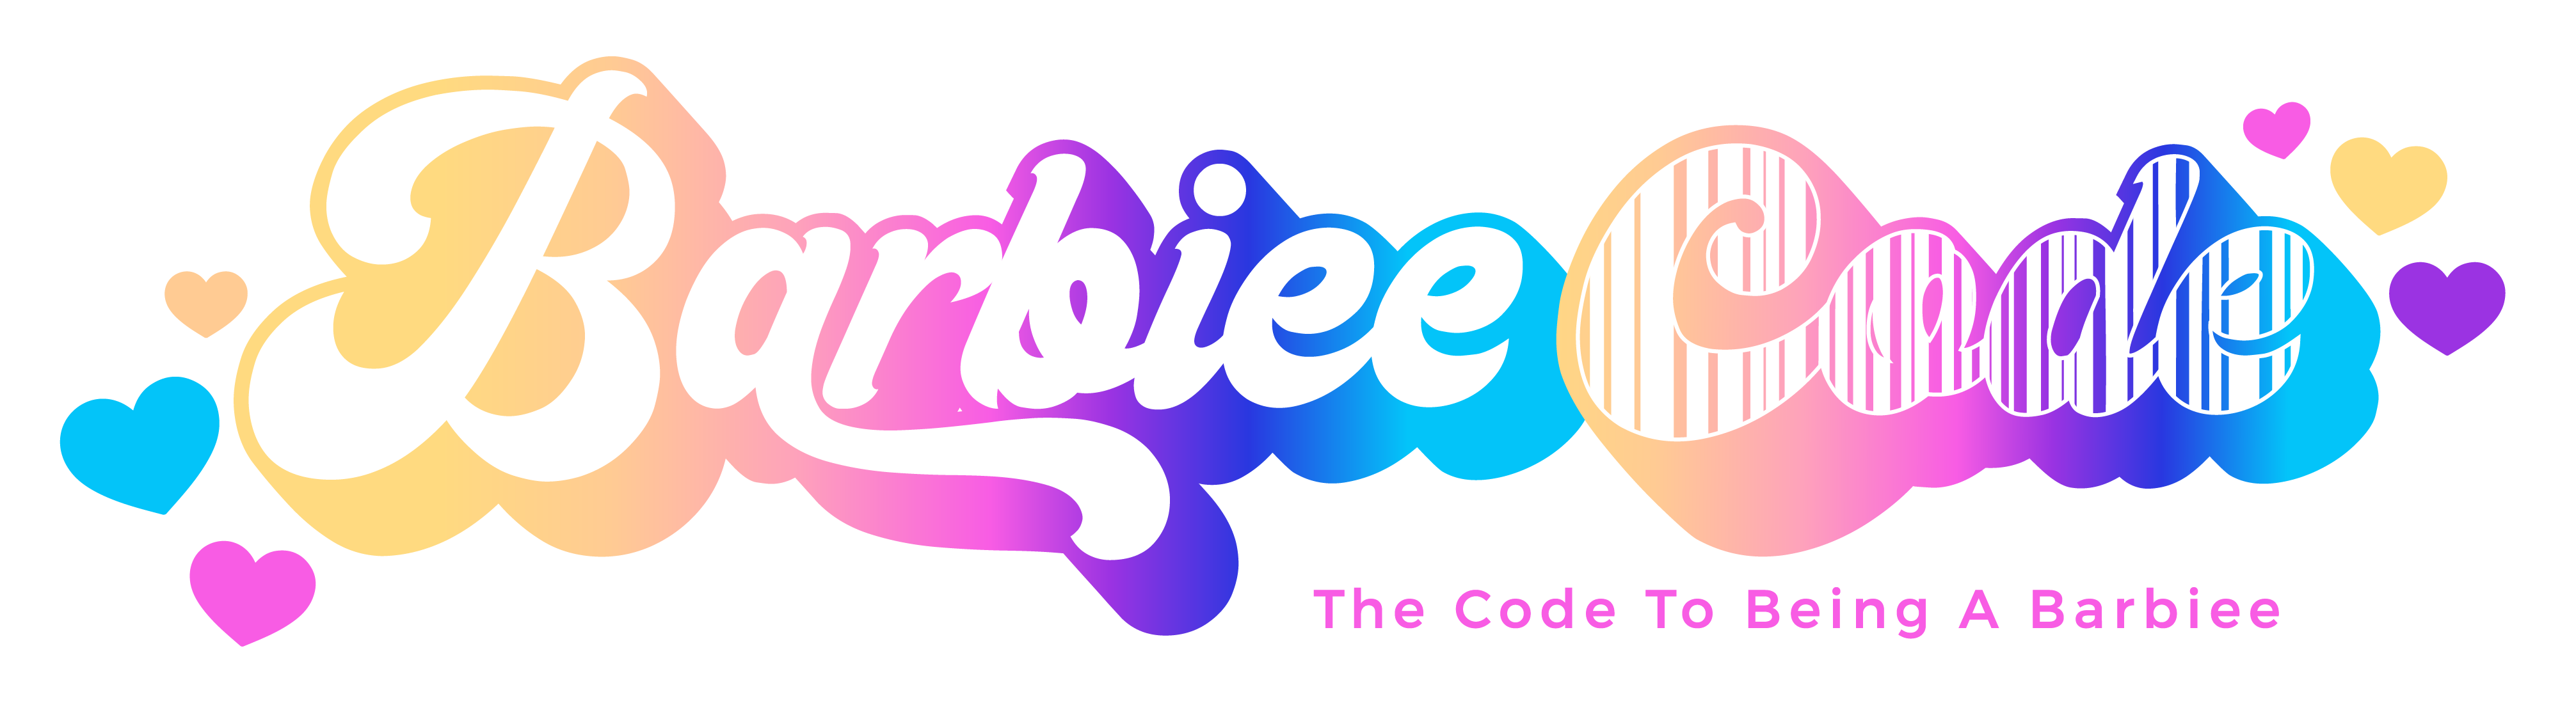 Barbiee Code